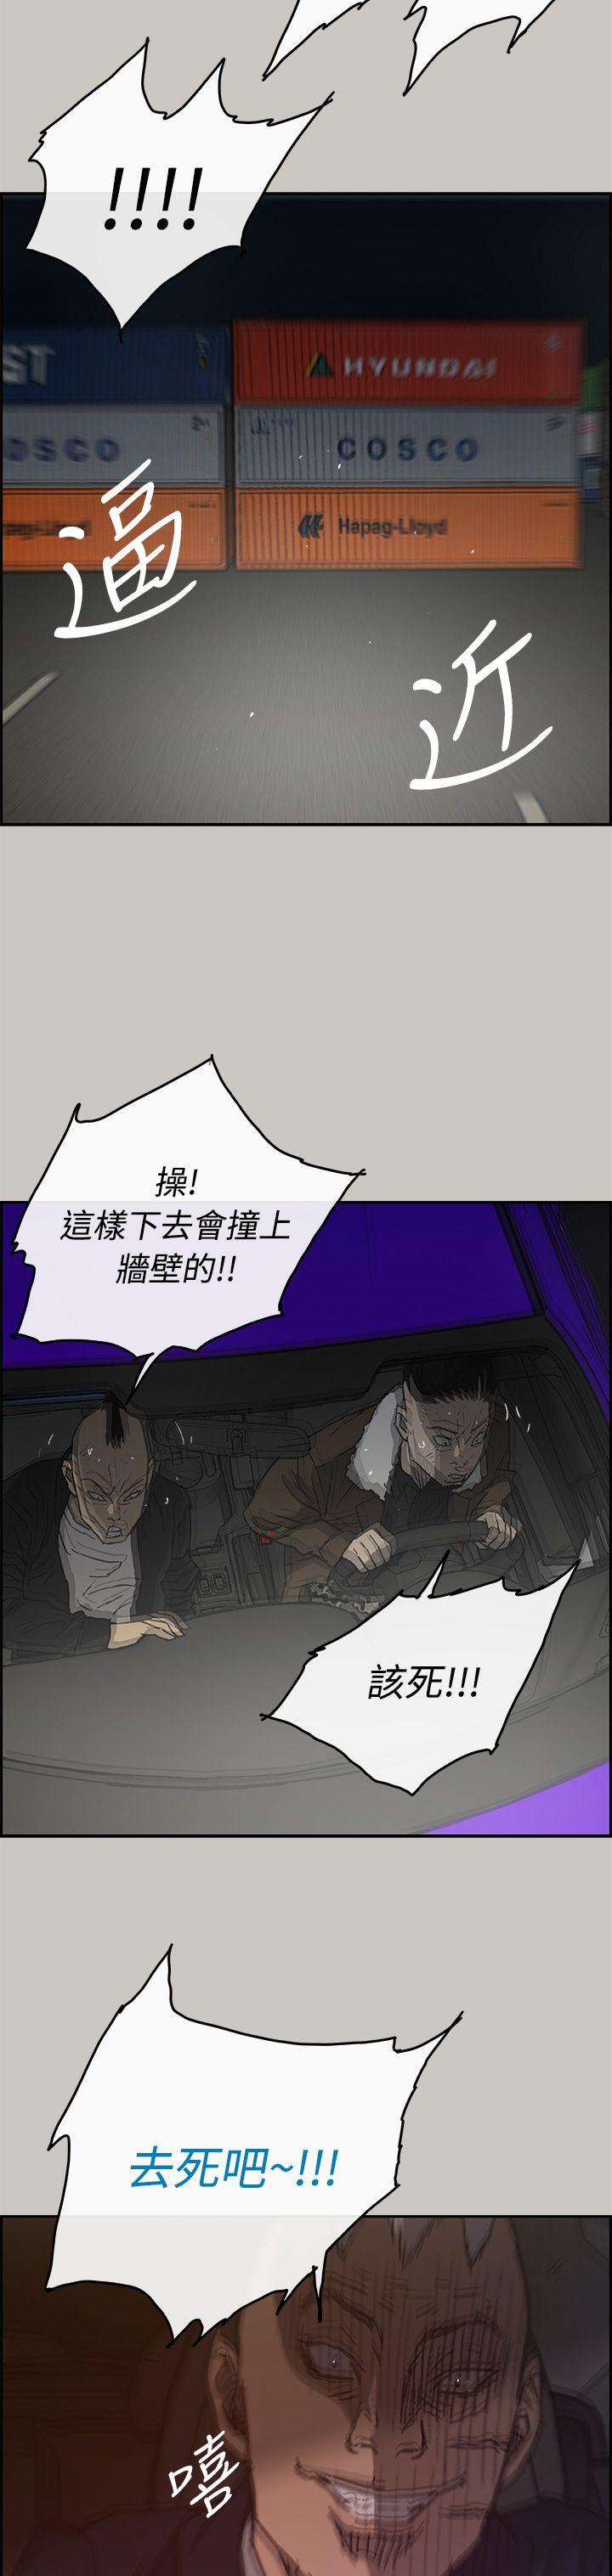 《MAD:小姐与司机》漫画 第43话